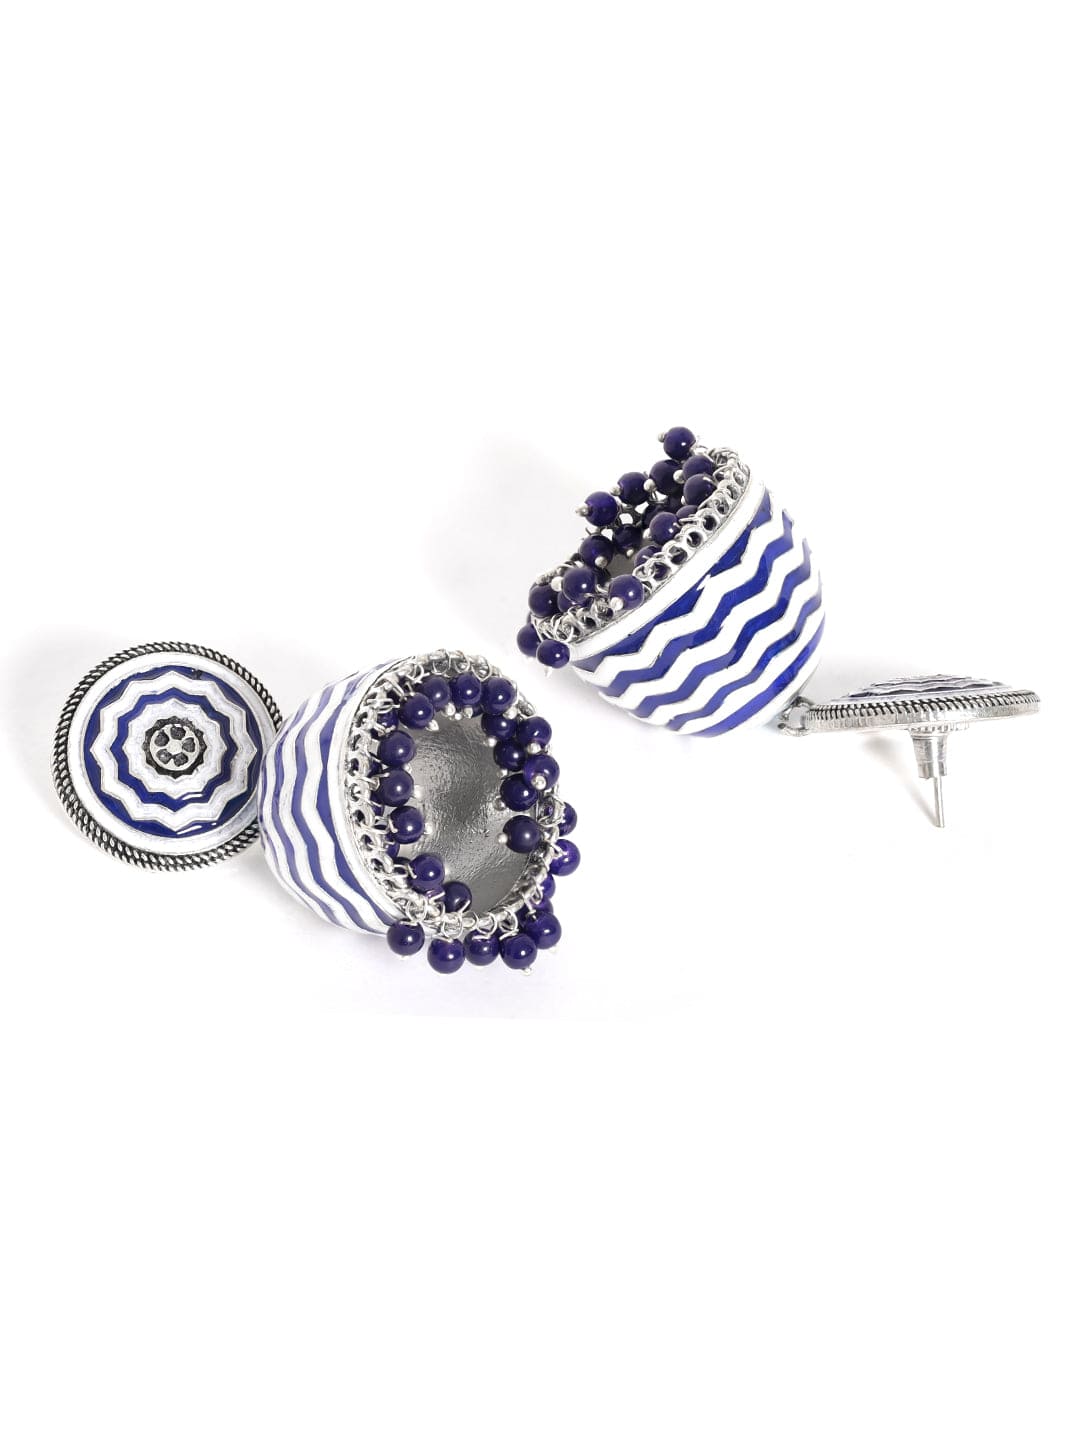 Rubans Oxidized silver Blue & White enamel organic textured Blue beaded Statement Jhumka Earrings Earrings